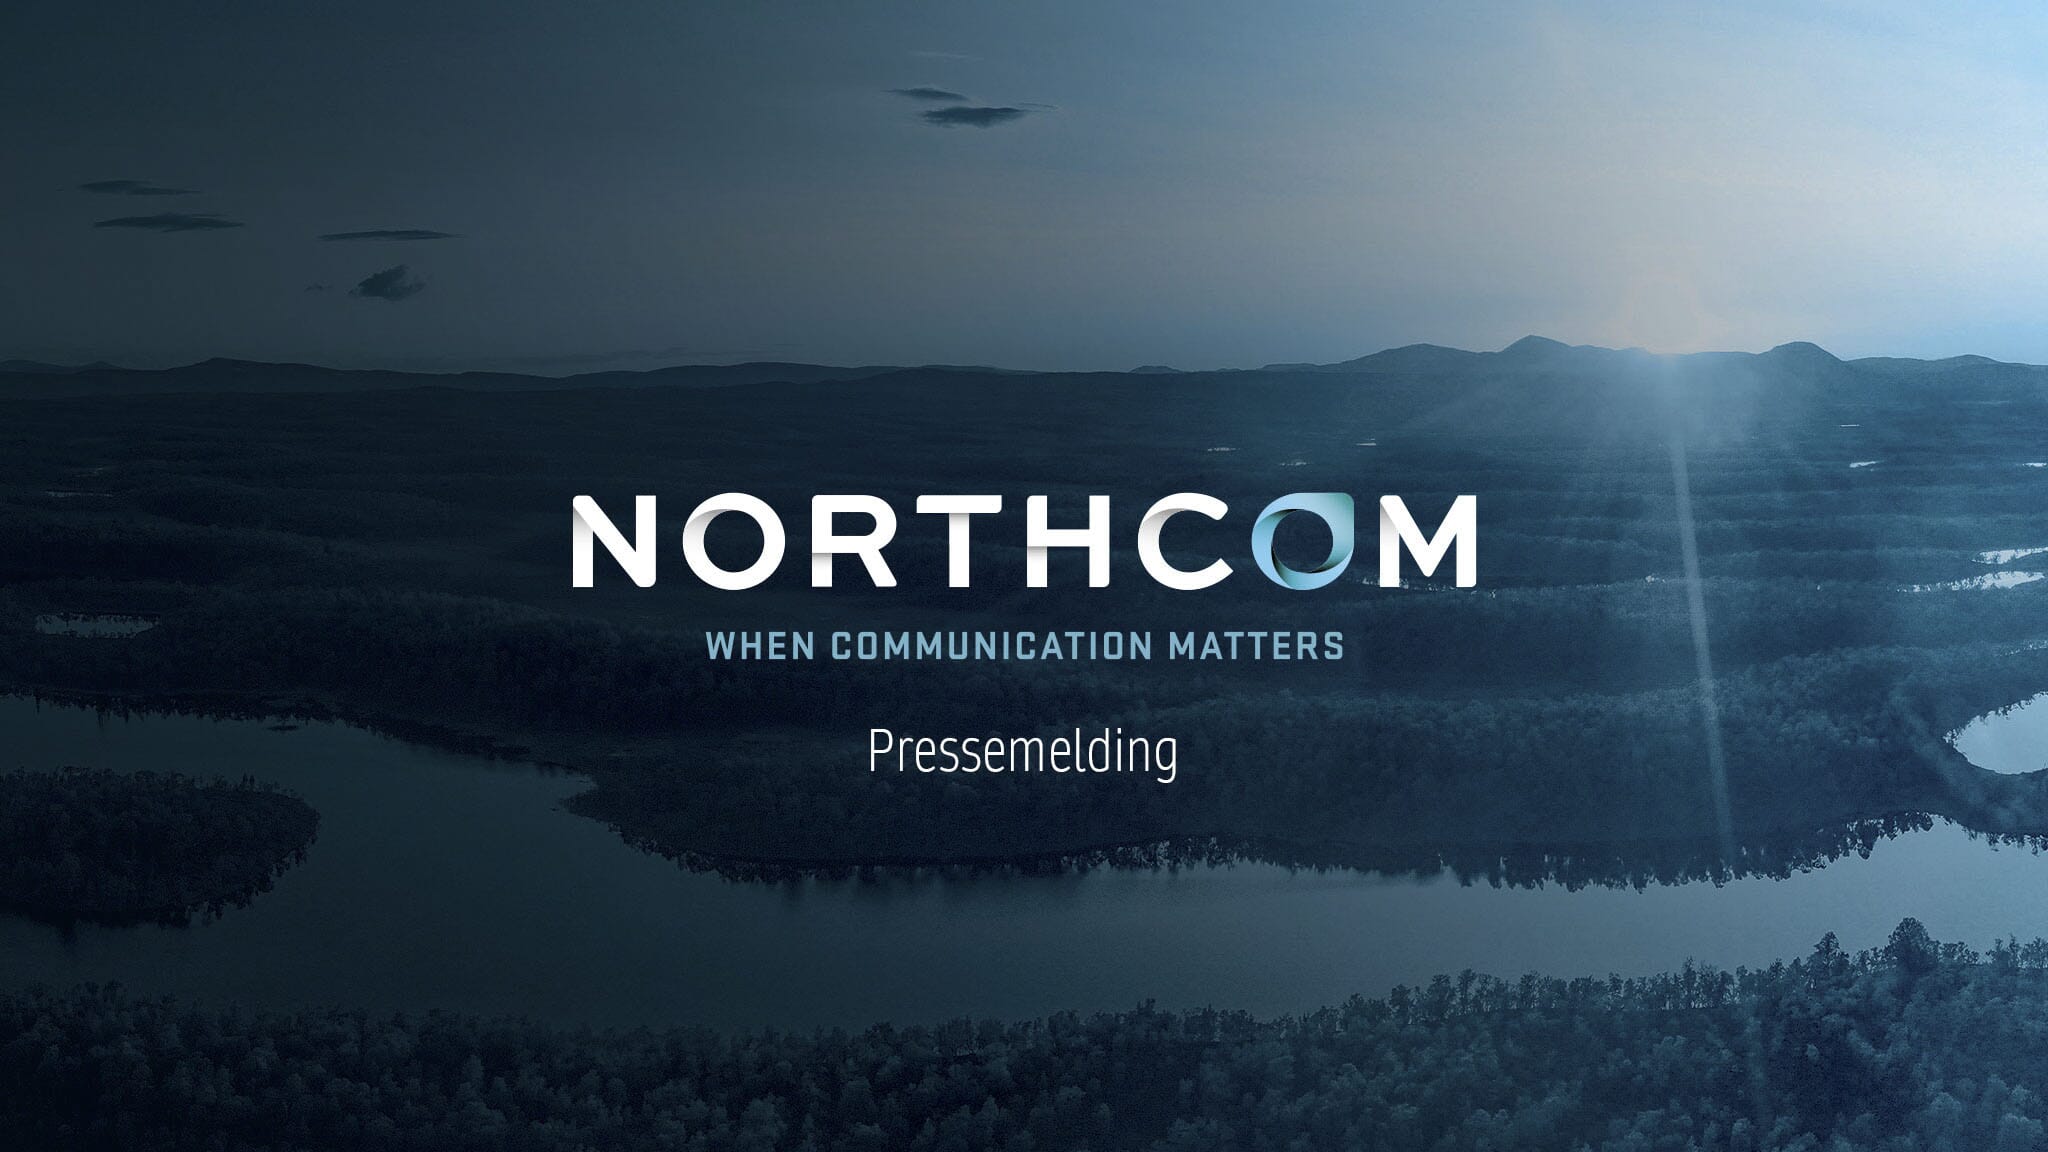 Northcom pressemelding.jpg